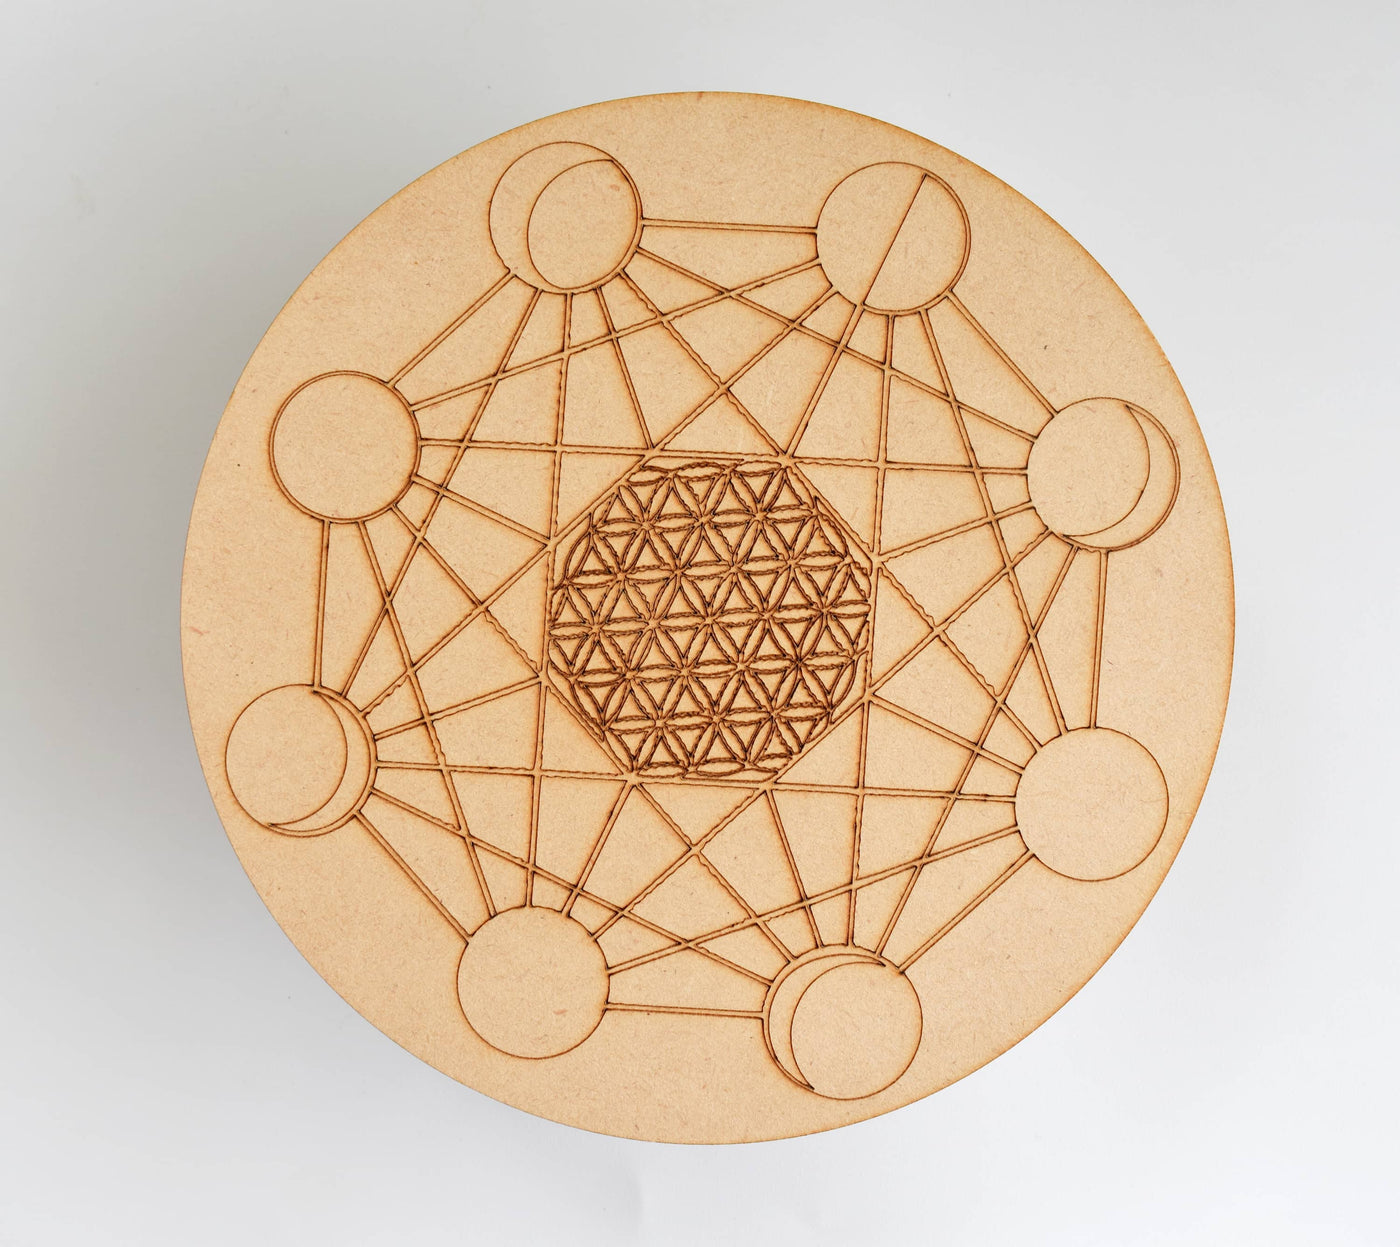 7 Chakra Yoga Crystal Grid Board, 6" Wooden Crystal Grid Plate